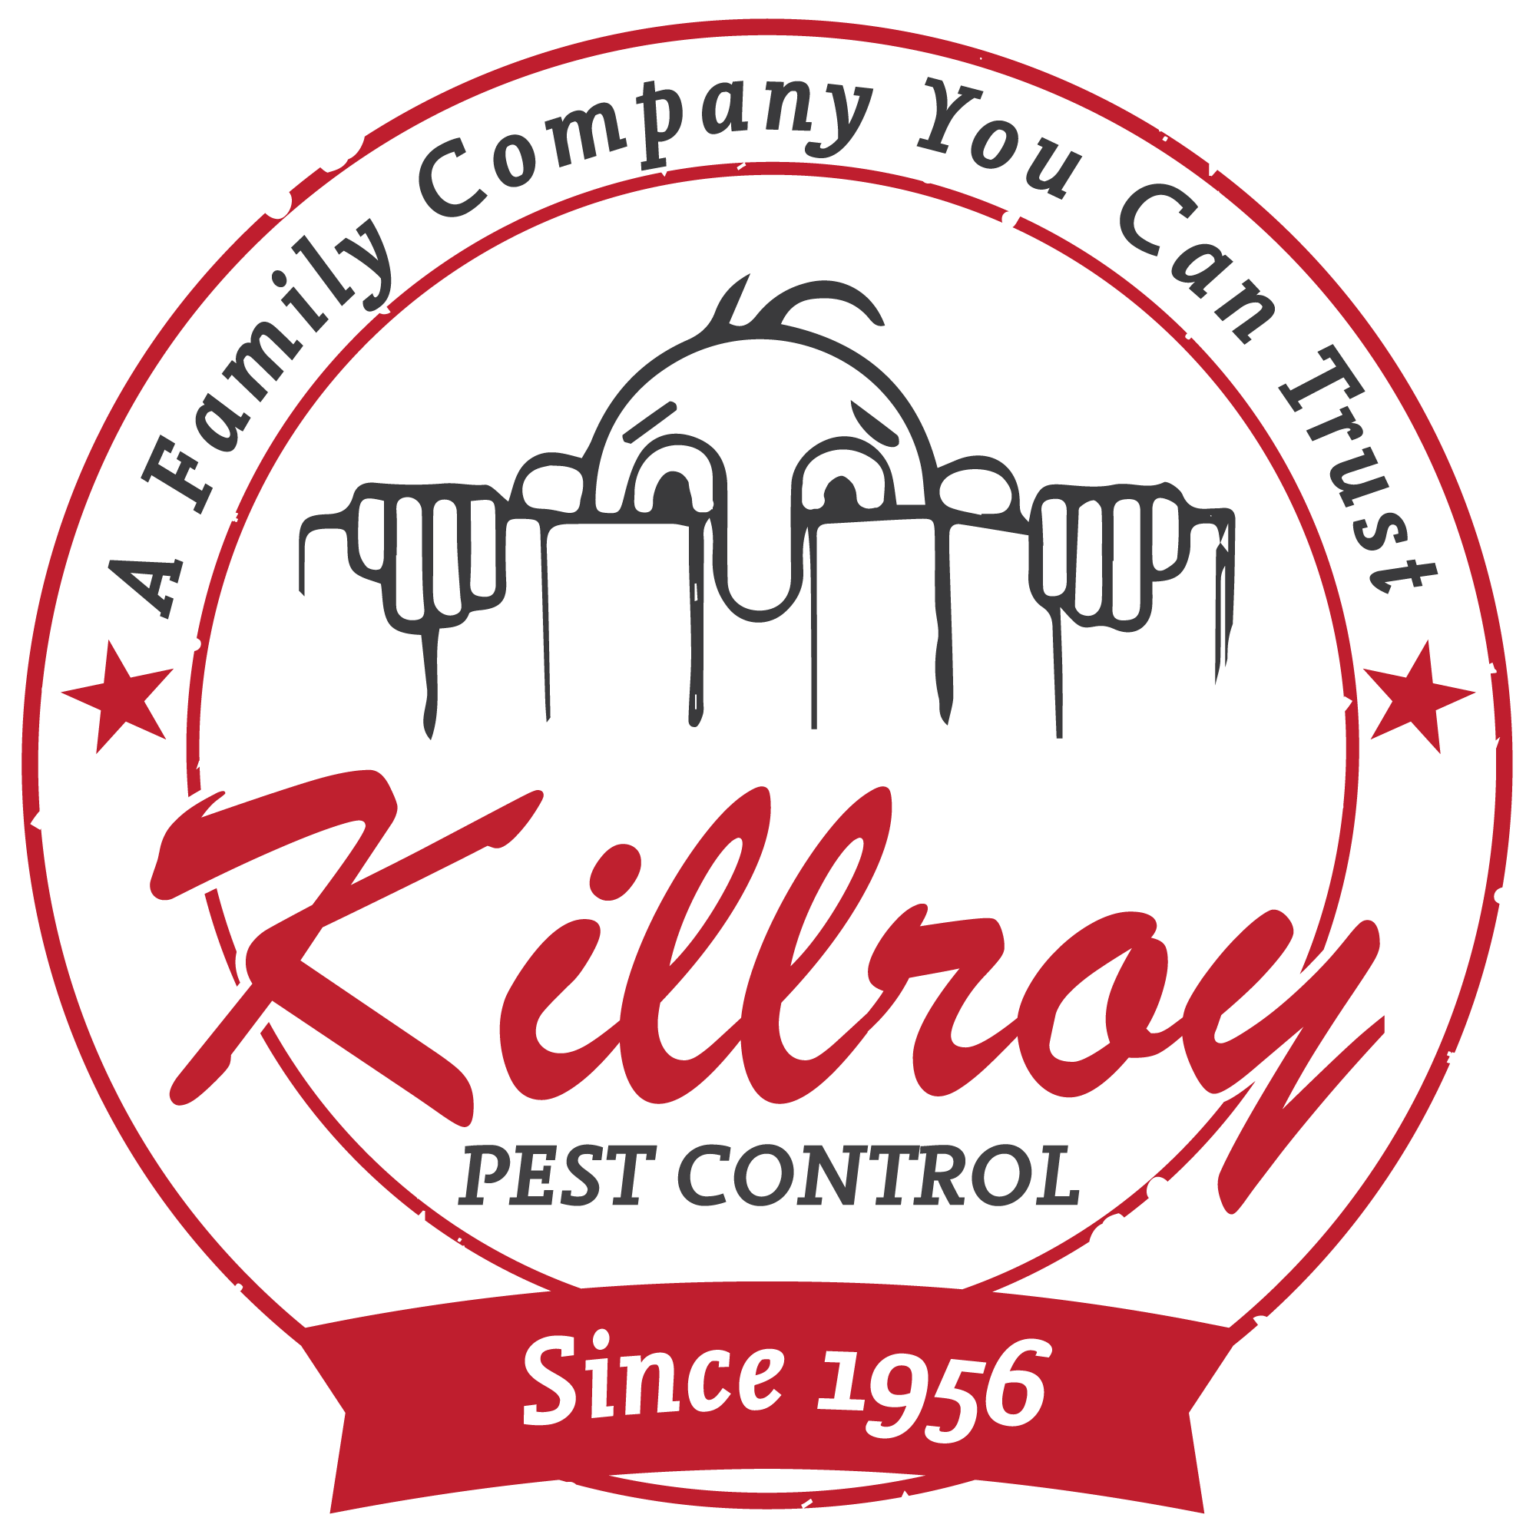 Killroy Pest Control since 1956